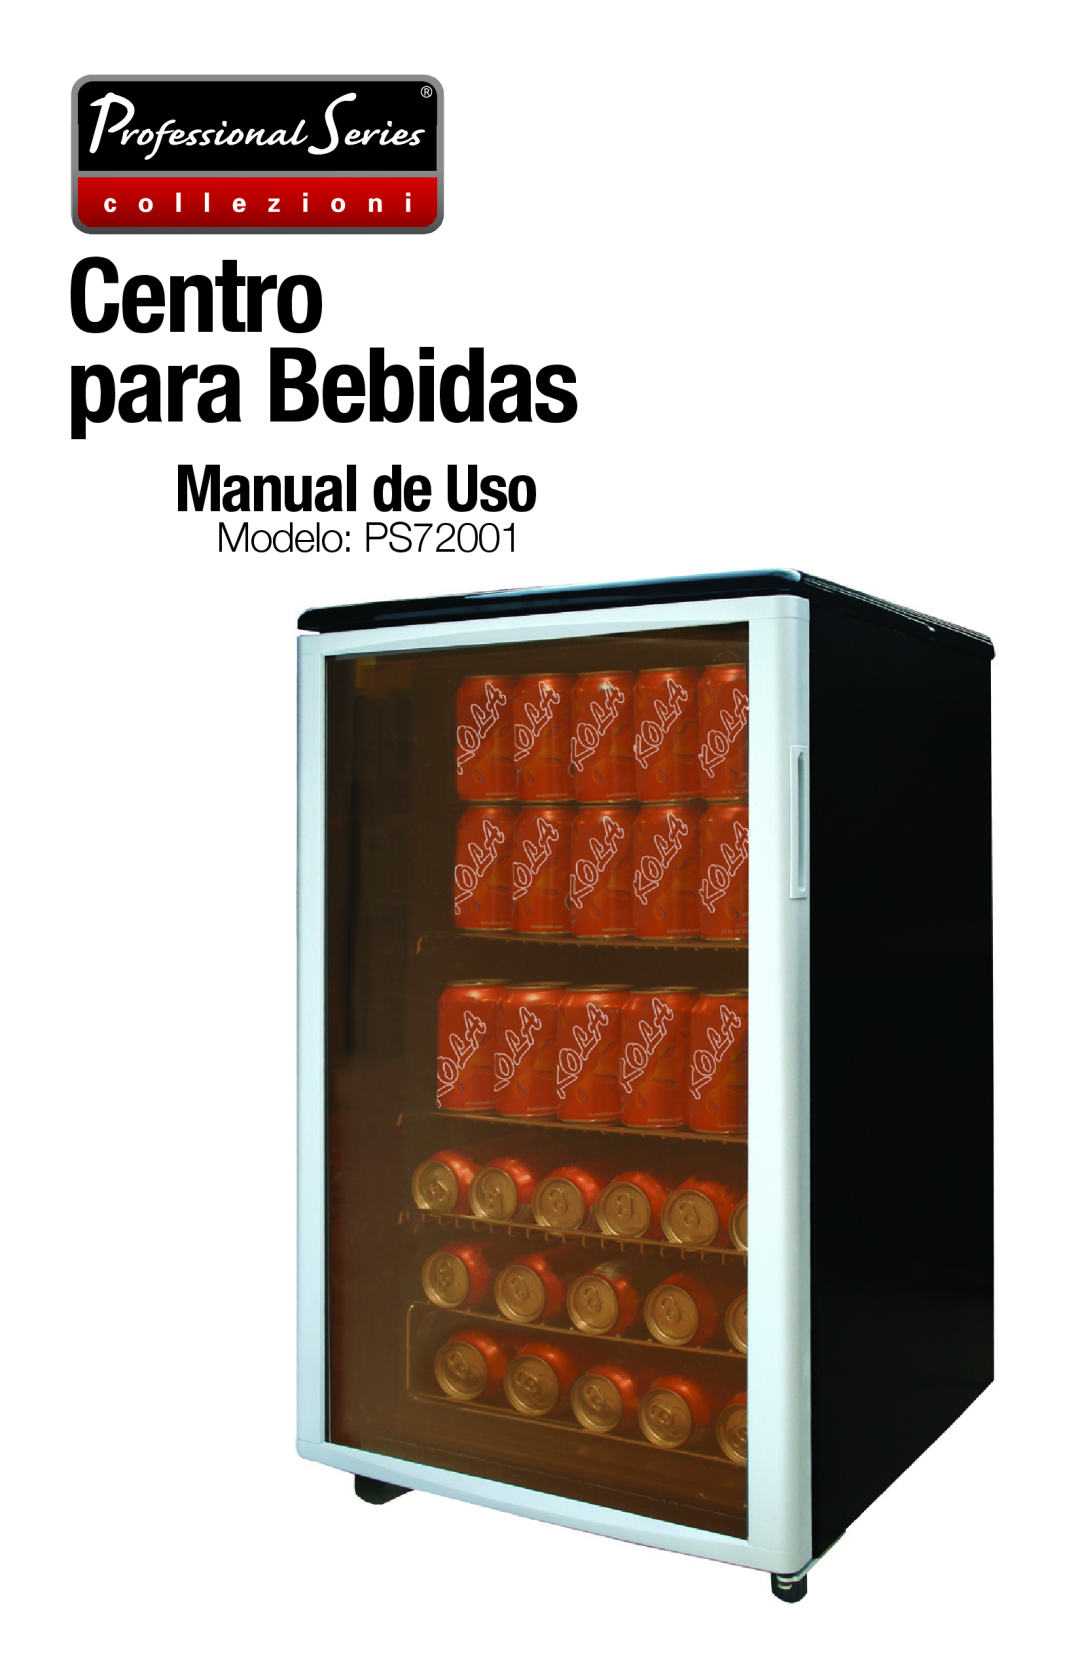 Professional Series user manual Manual de Uso, Modelo PS72001, Centro para Bebidas 